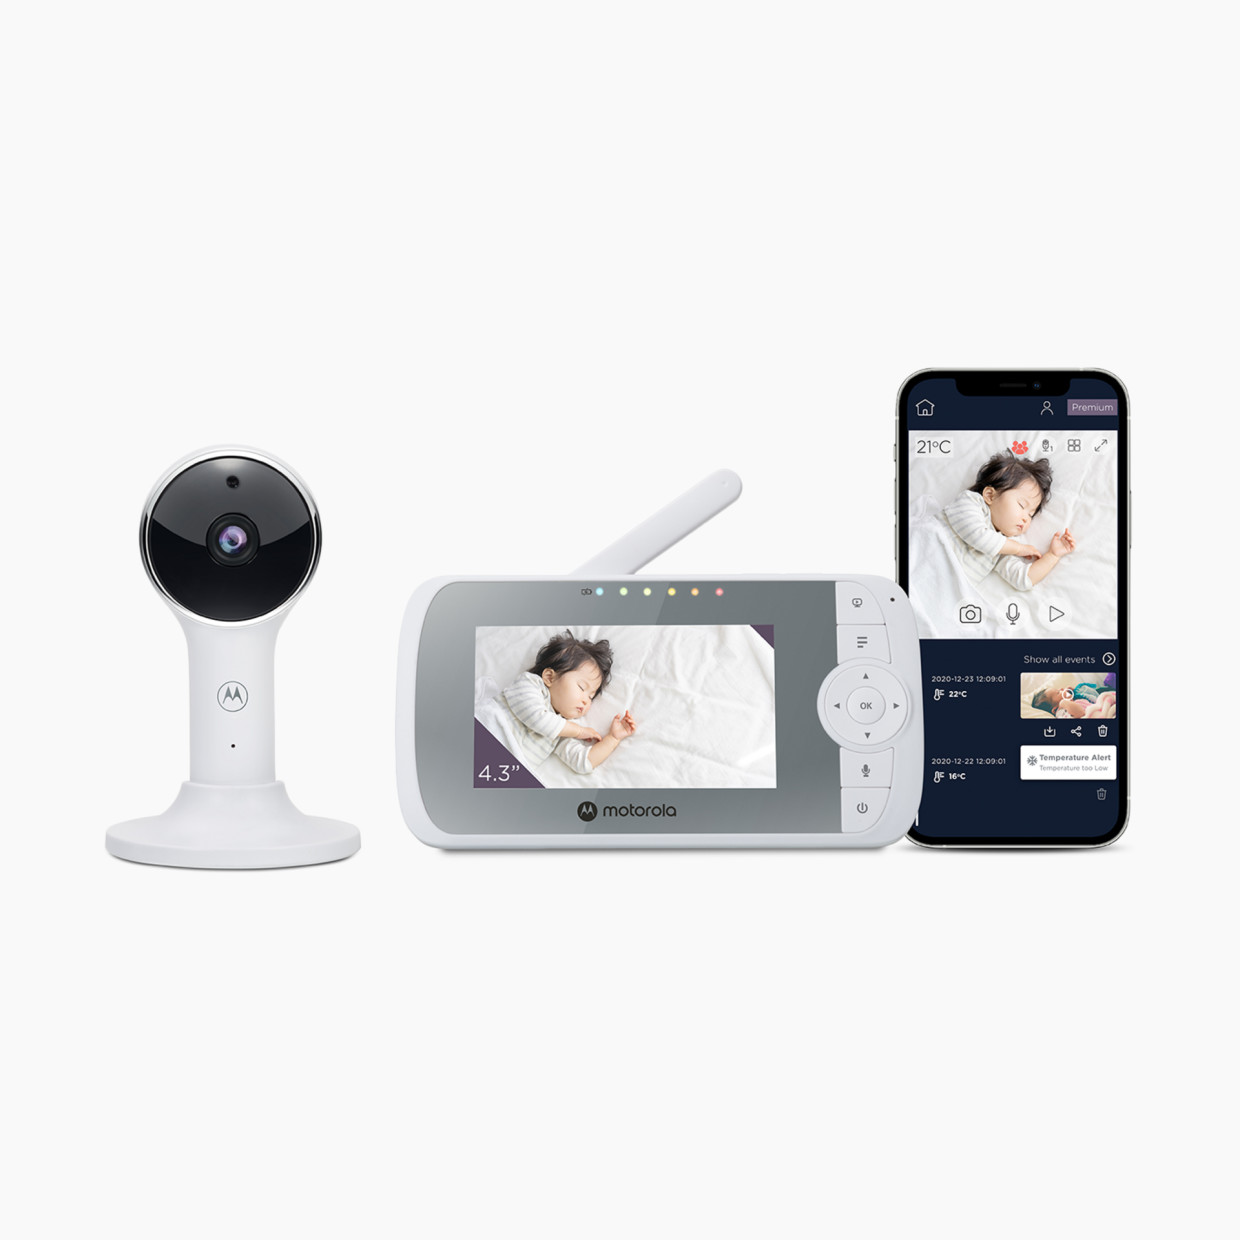 Motorola VM64 Connect 4.3" WiFi Video Baby Monitor.